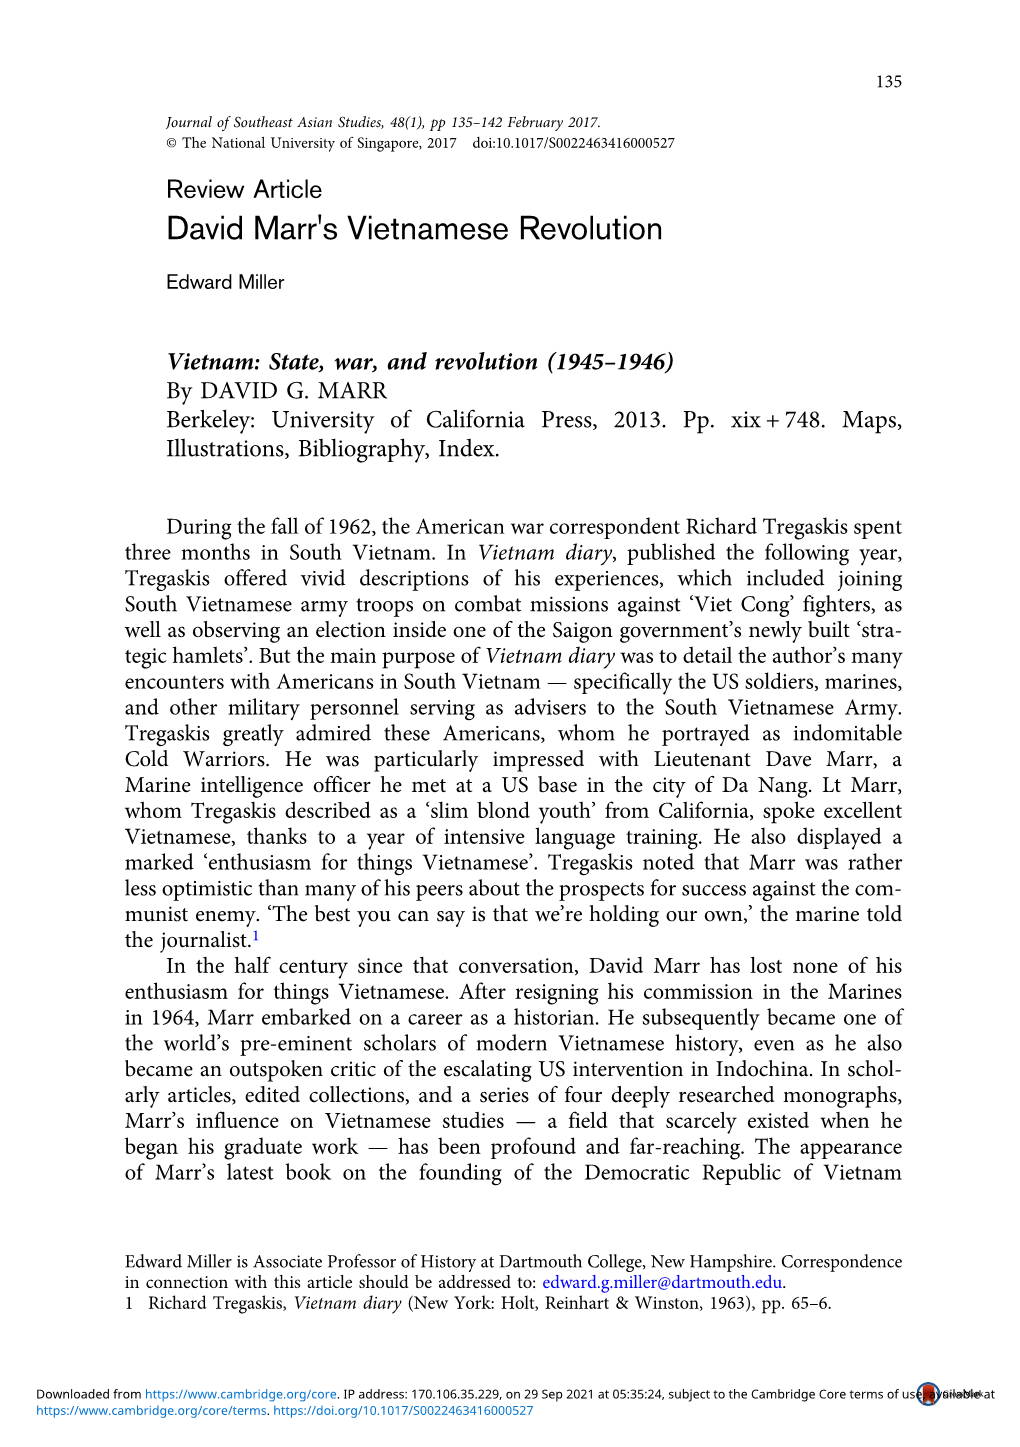 David Marr's Vietnamese Revolution